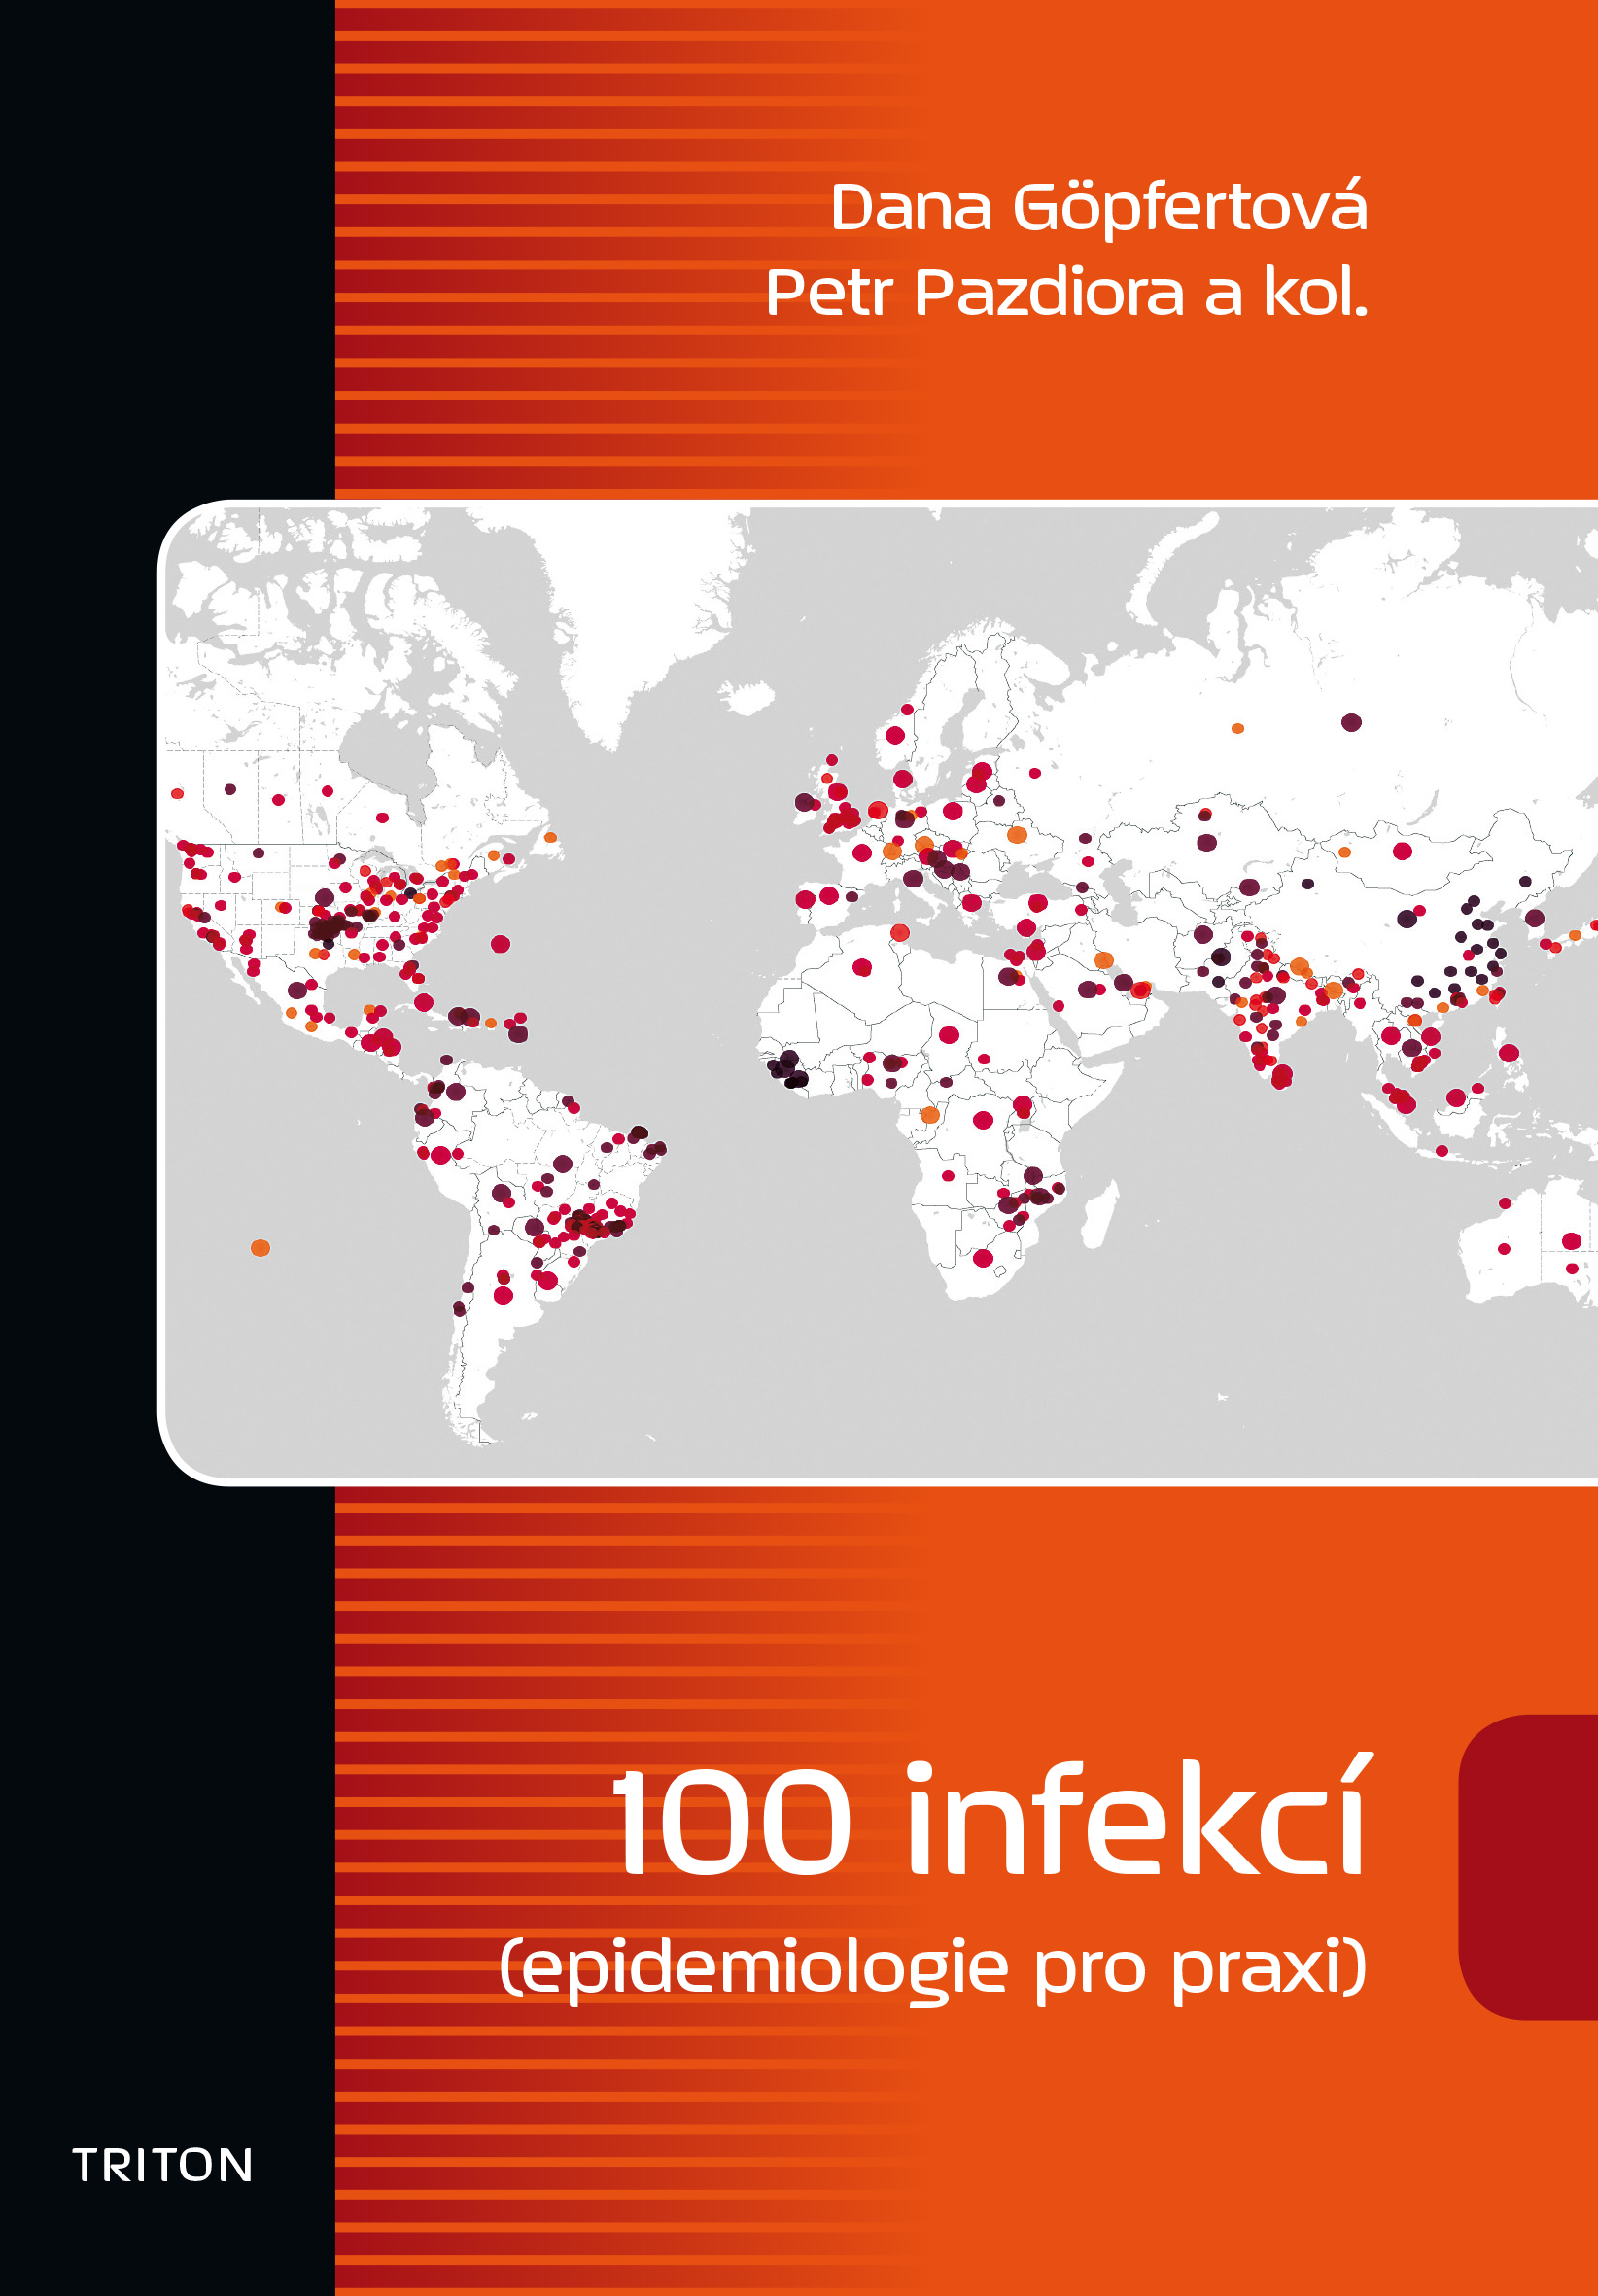 100 infekcí - epidemiologie pro praxi